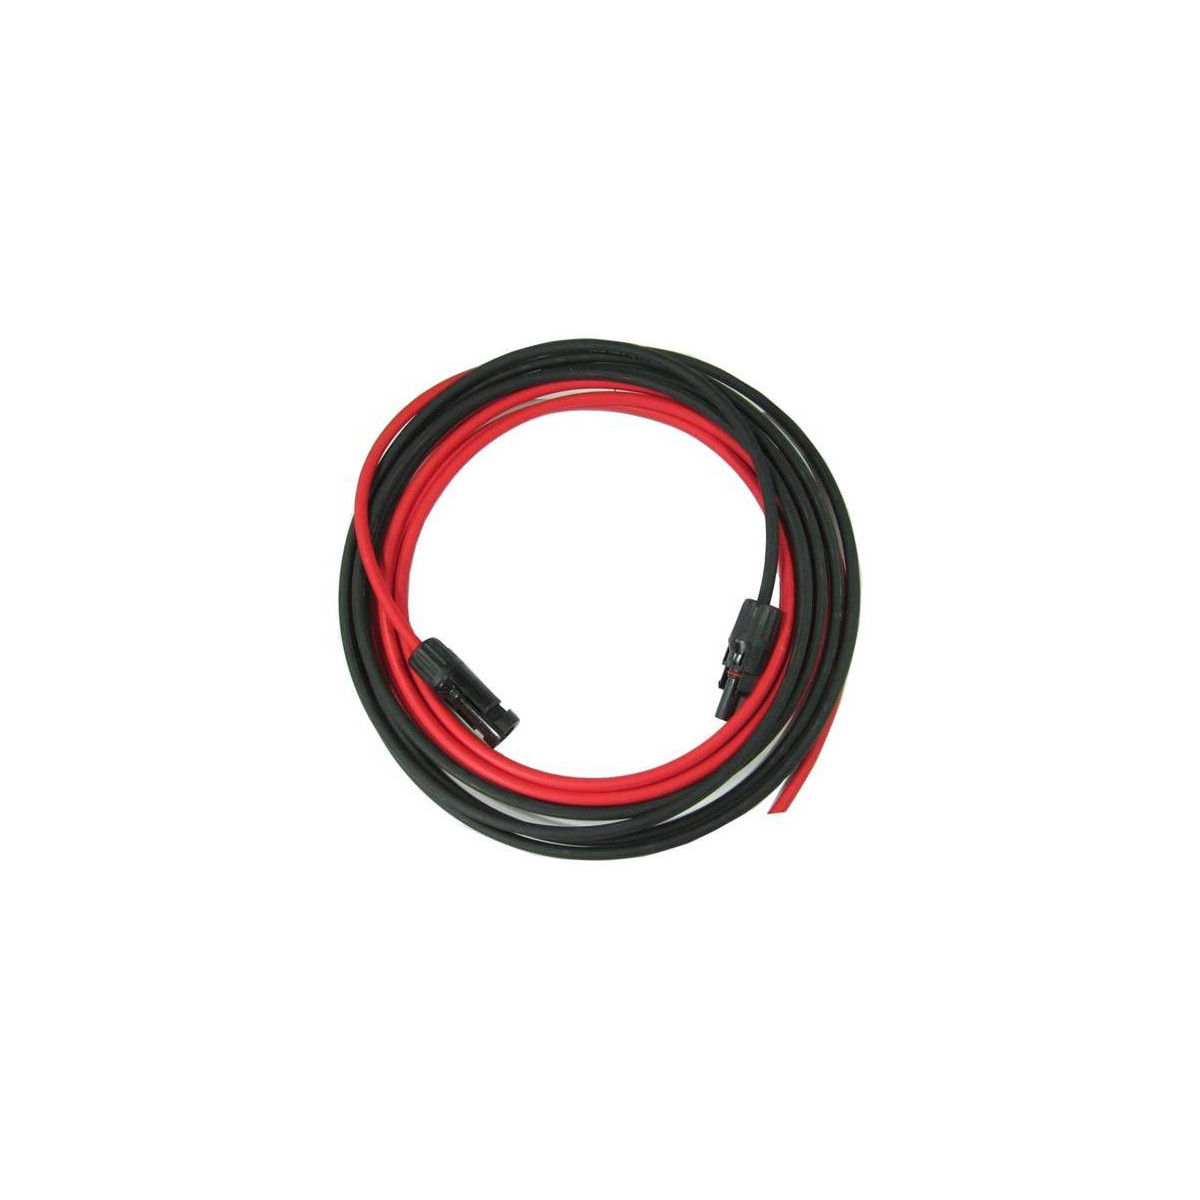 Viac oSolární kabel 4mm2, červený+černý s konektory MC4, 3m